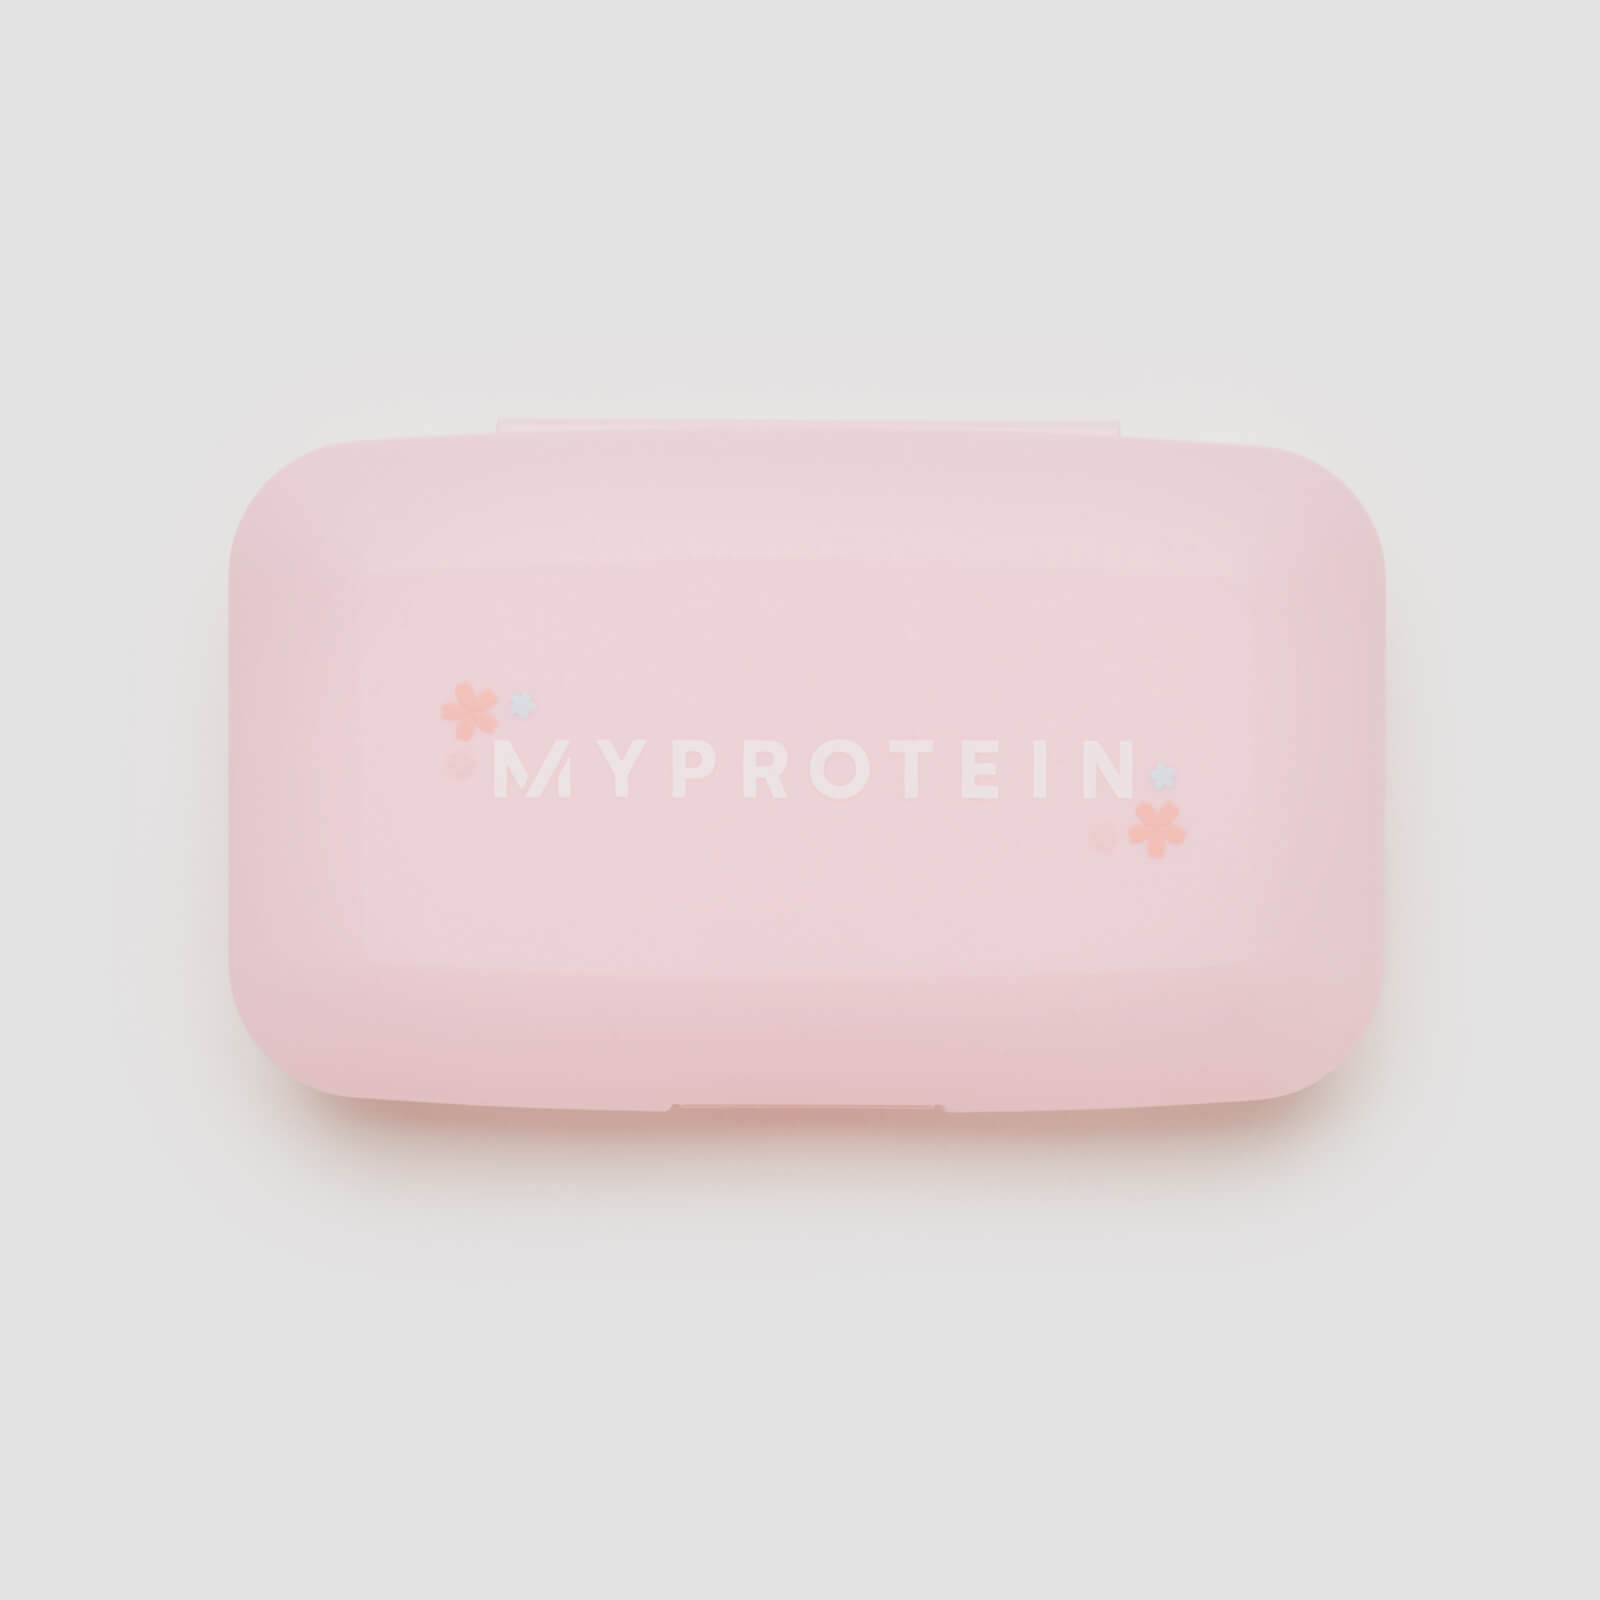 Myprotein Cherry Blossom Pill Box - Màu hồng